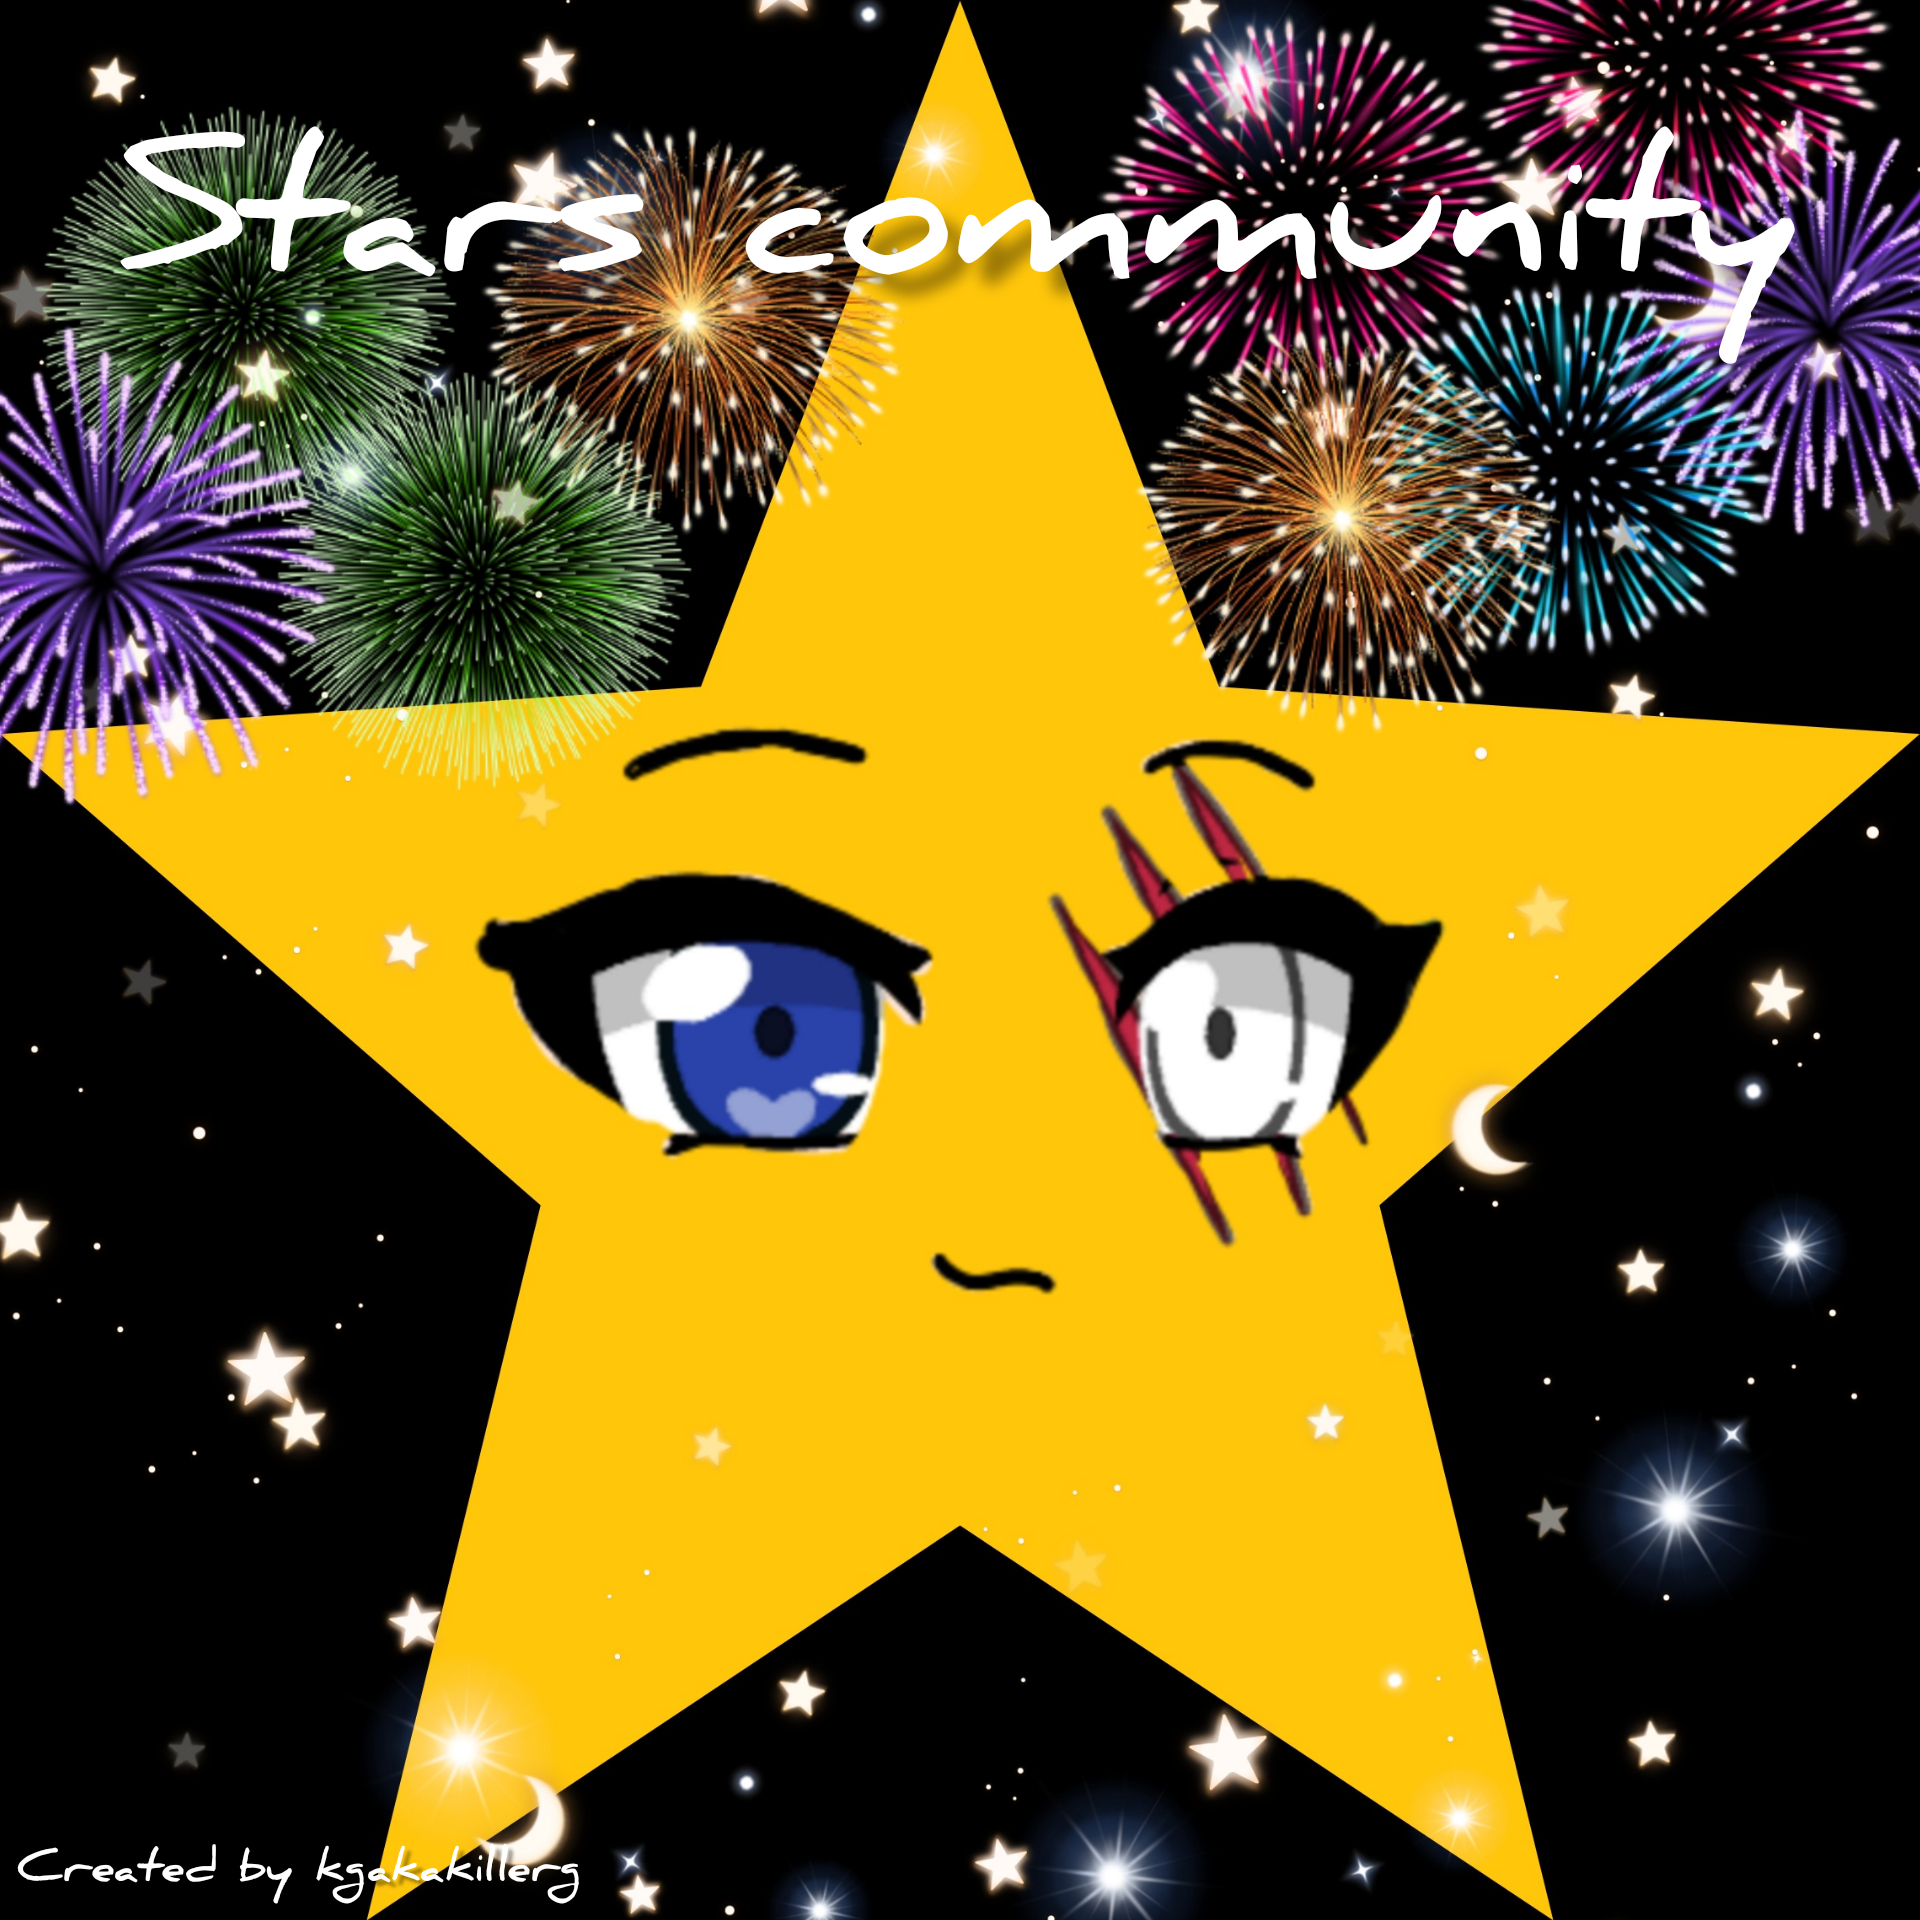 star's community